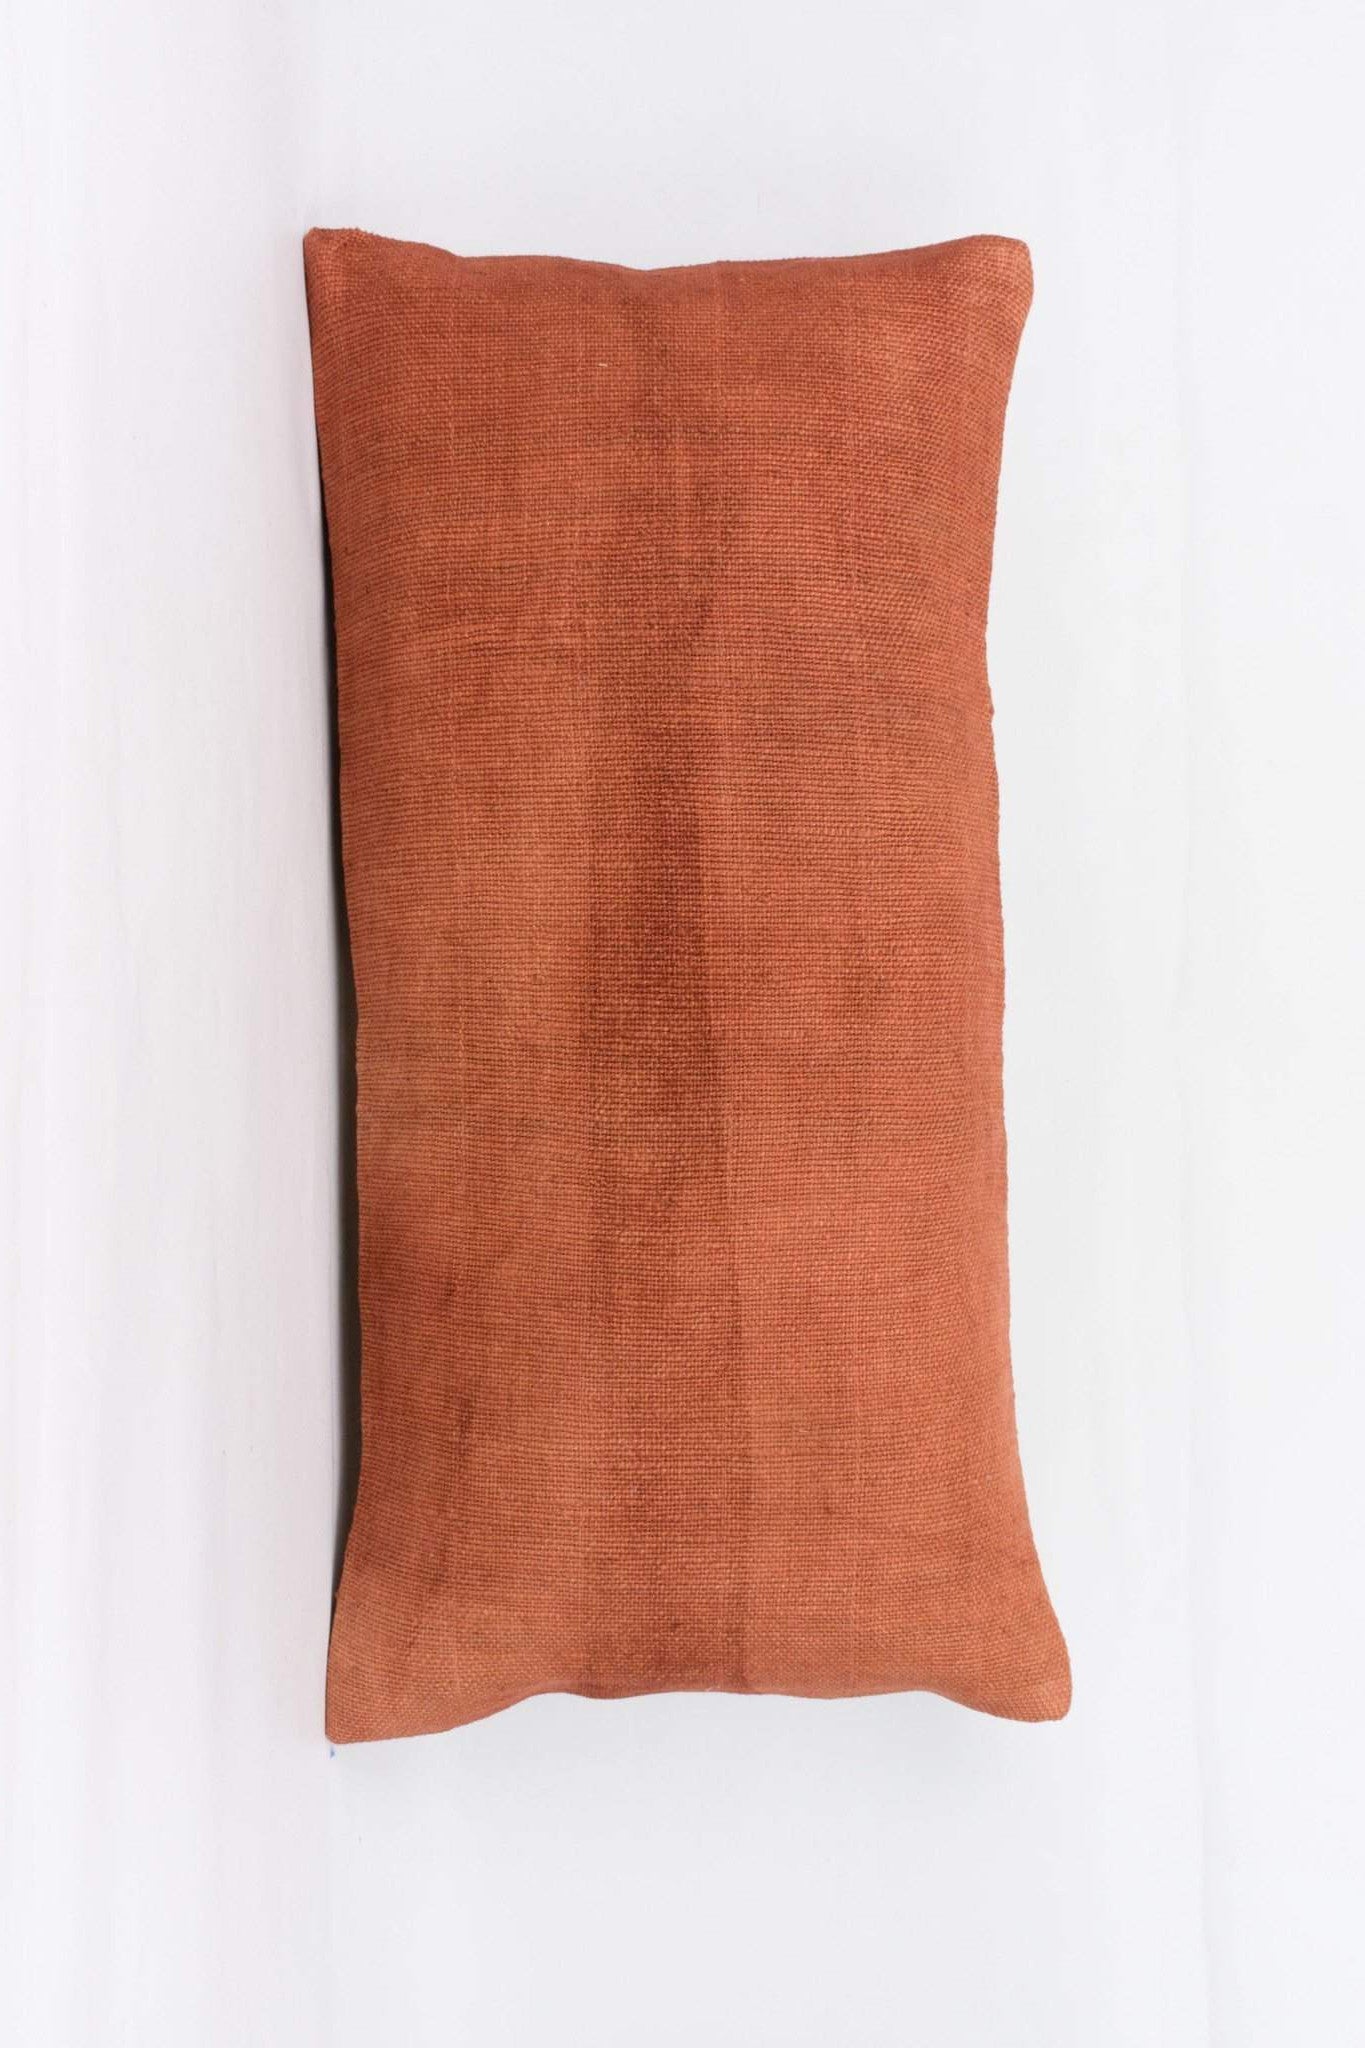 Plain Brown Kilim Pillow Cover 12x24 4189 - kilimpillowstore
 - 1